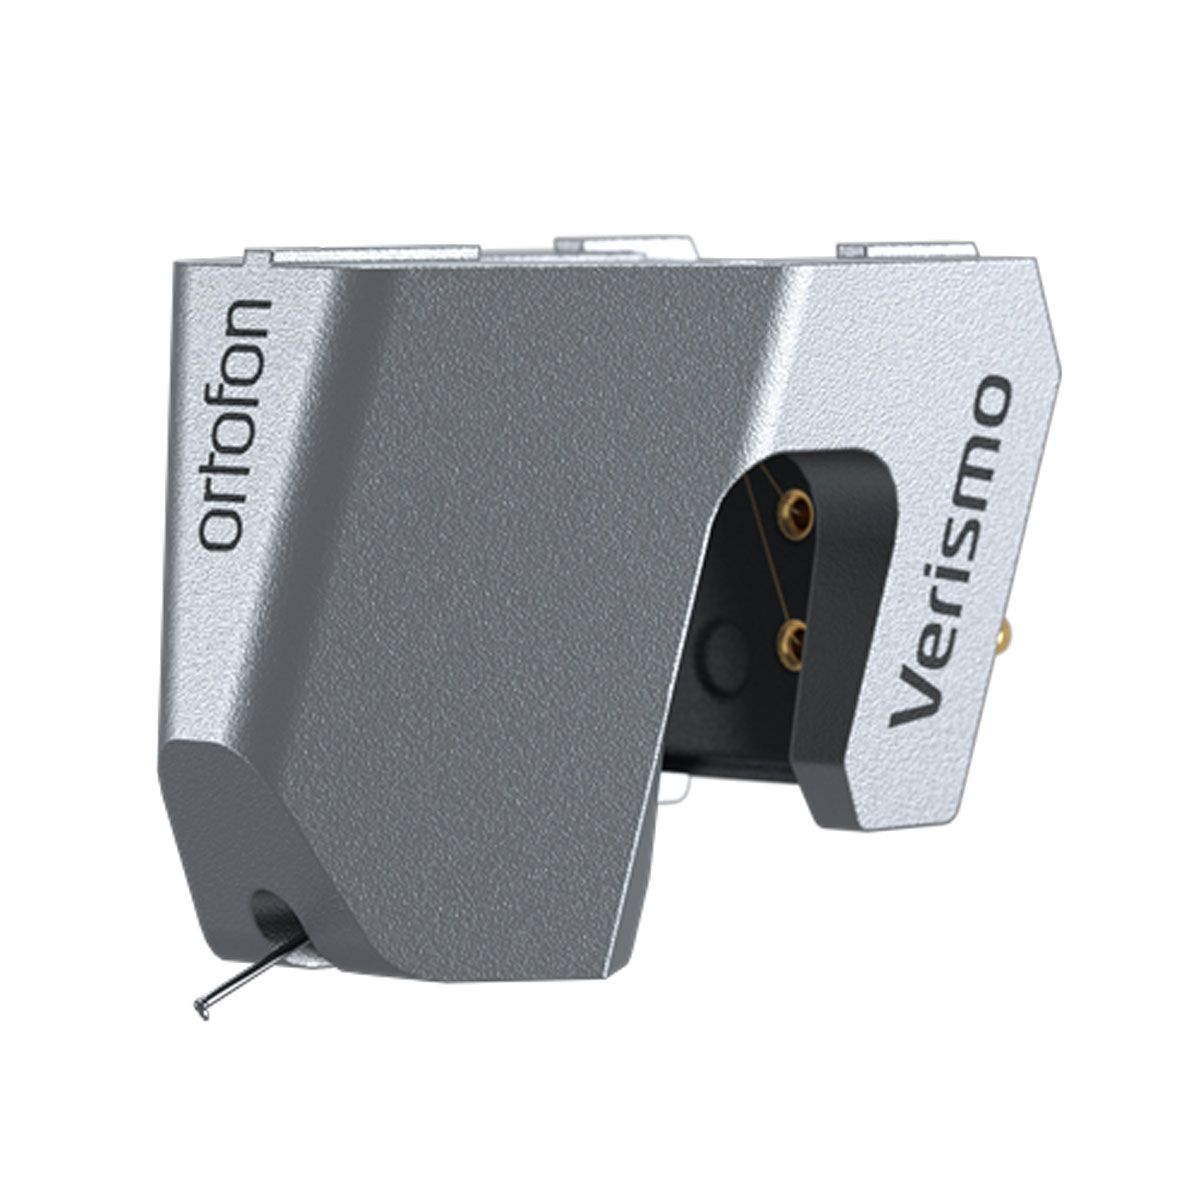 Ortofon MC Verismo cartridge, front angle view